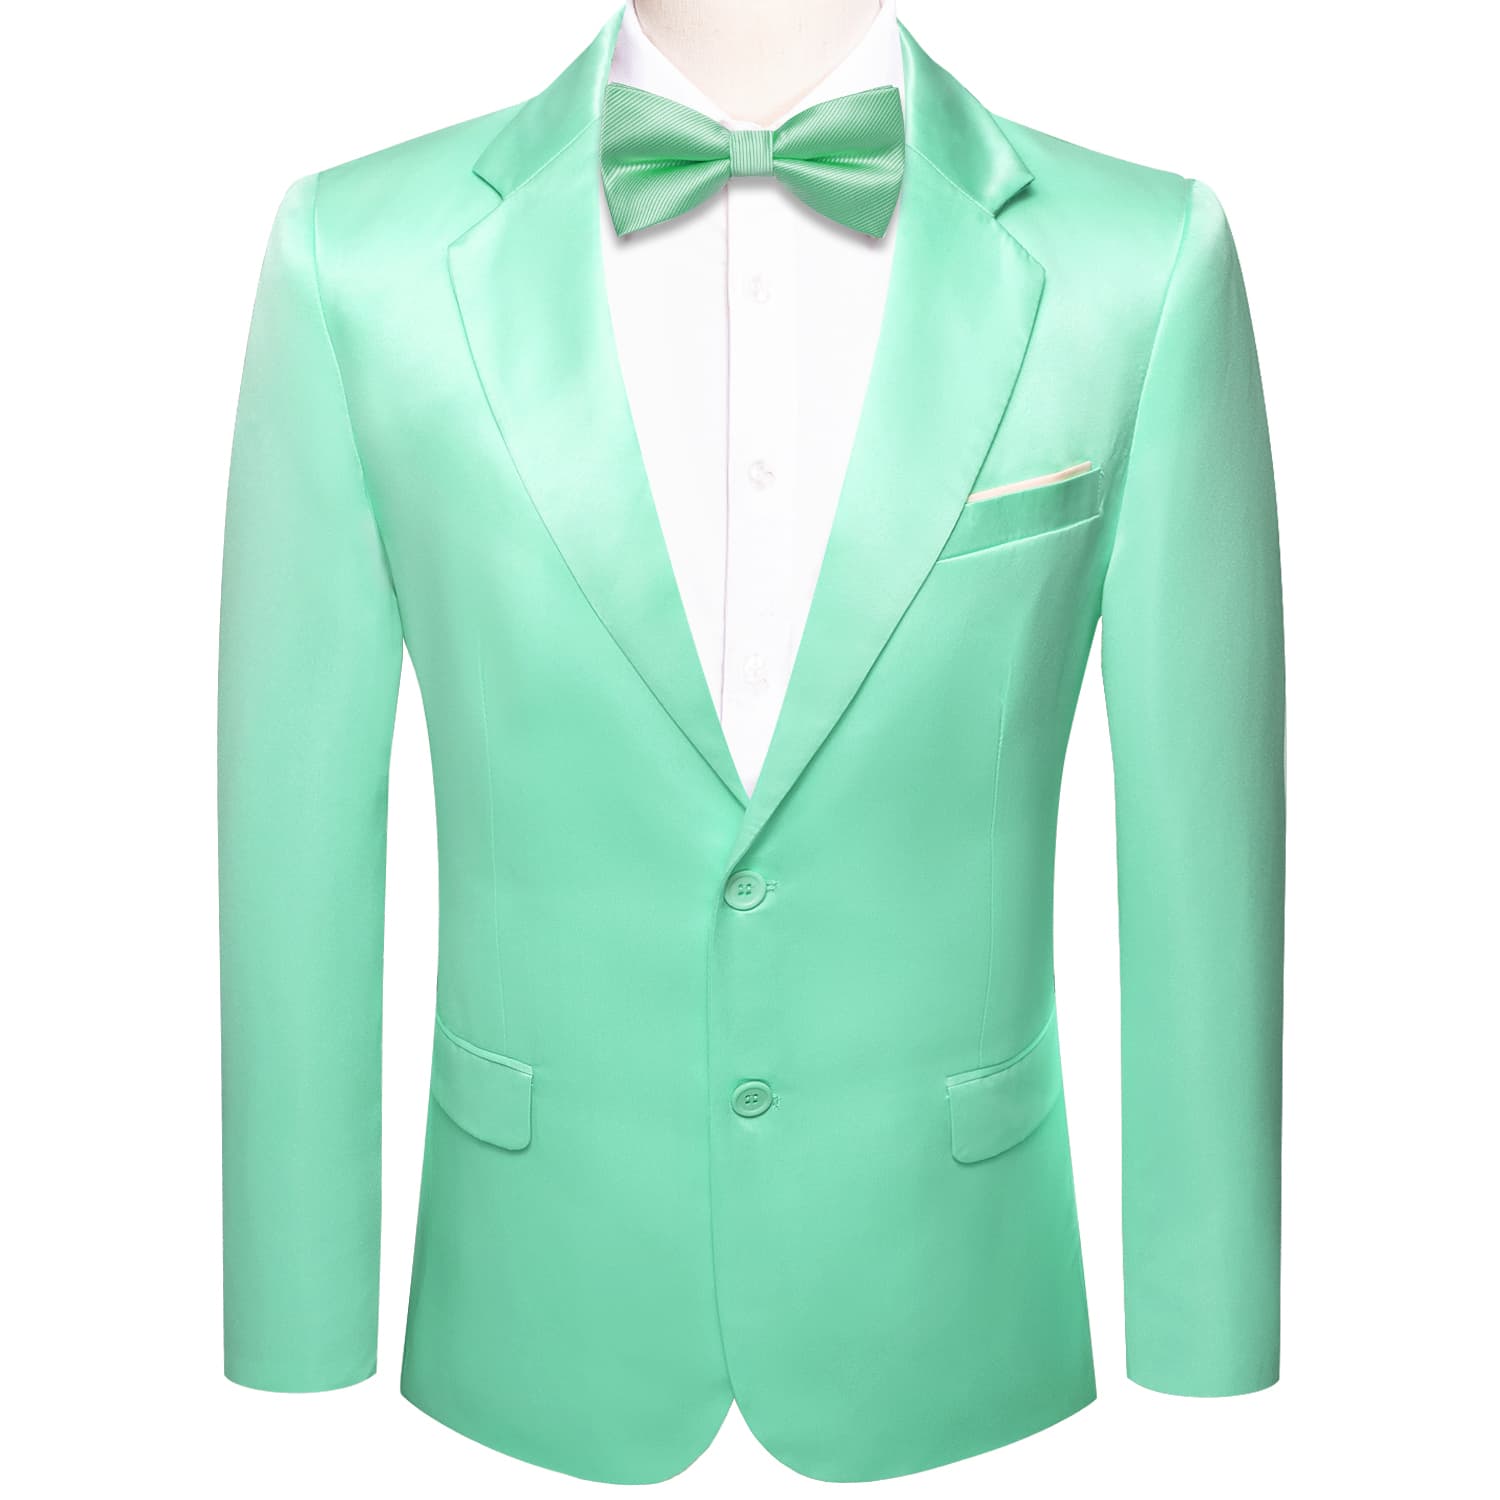 Blazer Auqamarin Green Party Solid Top Men Suit